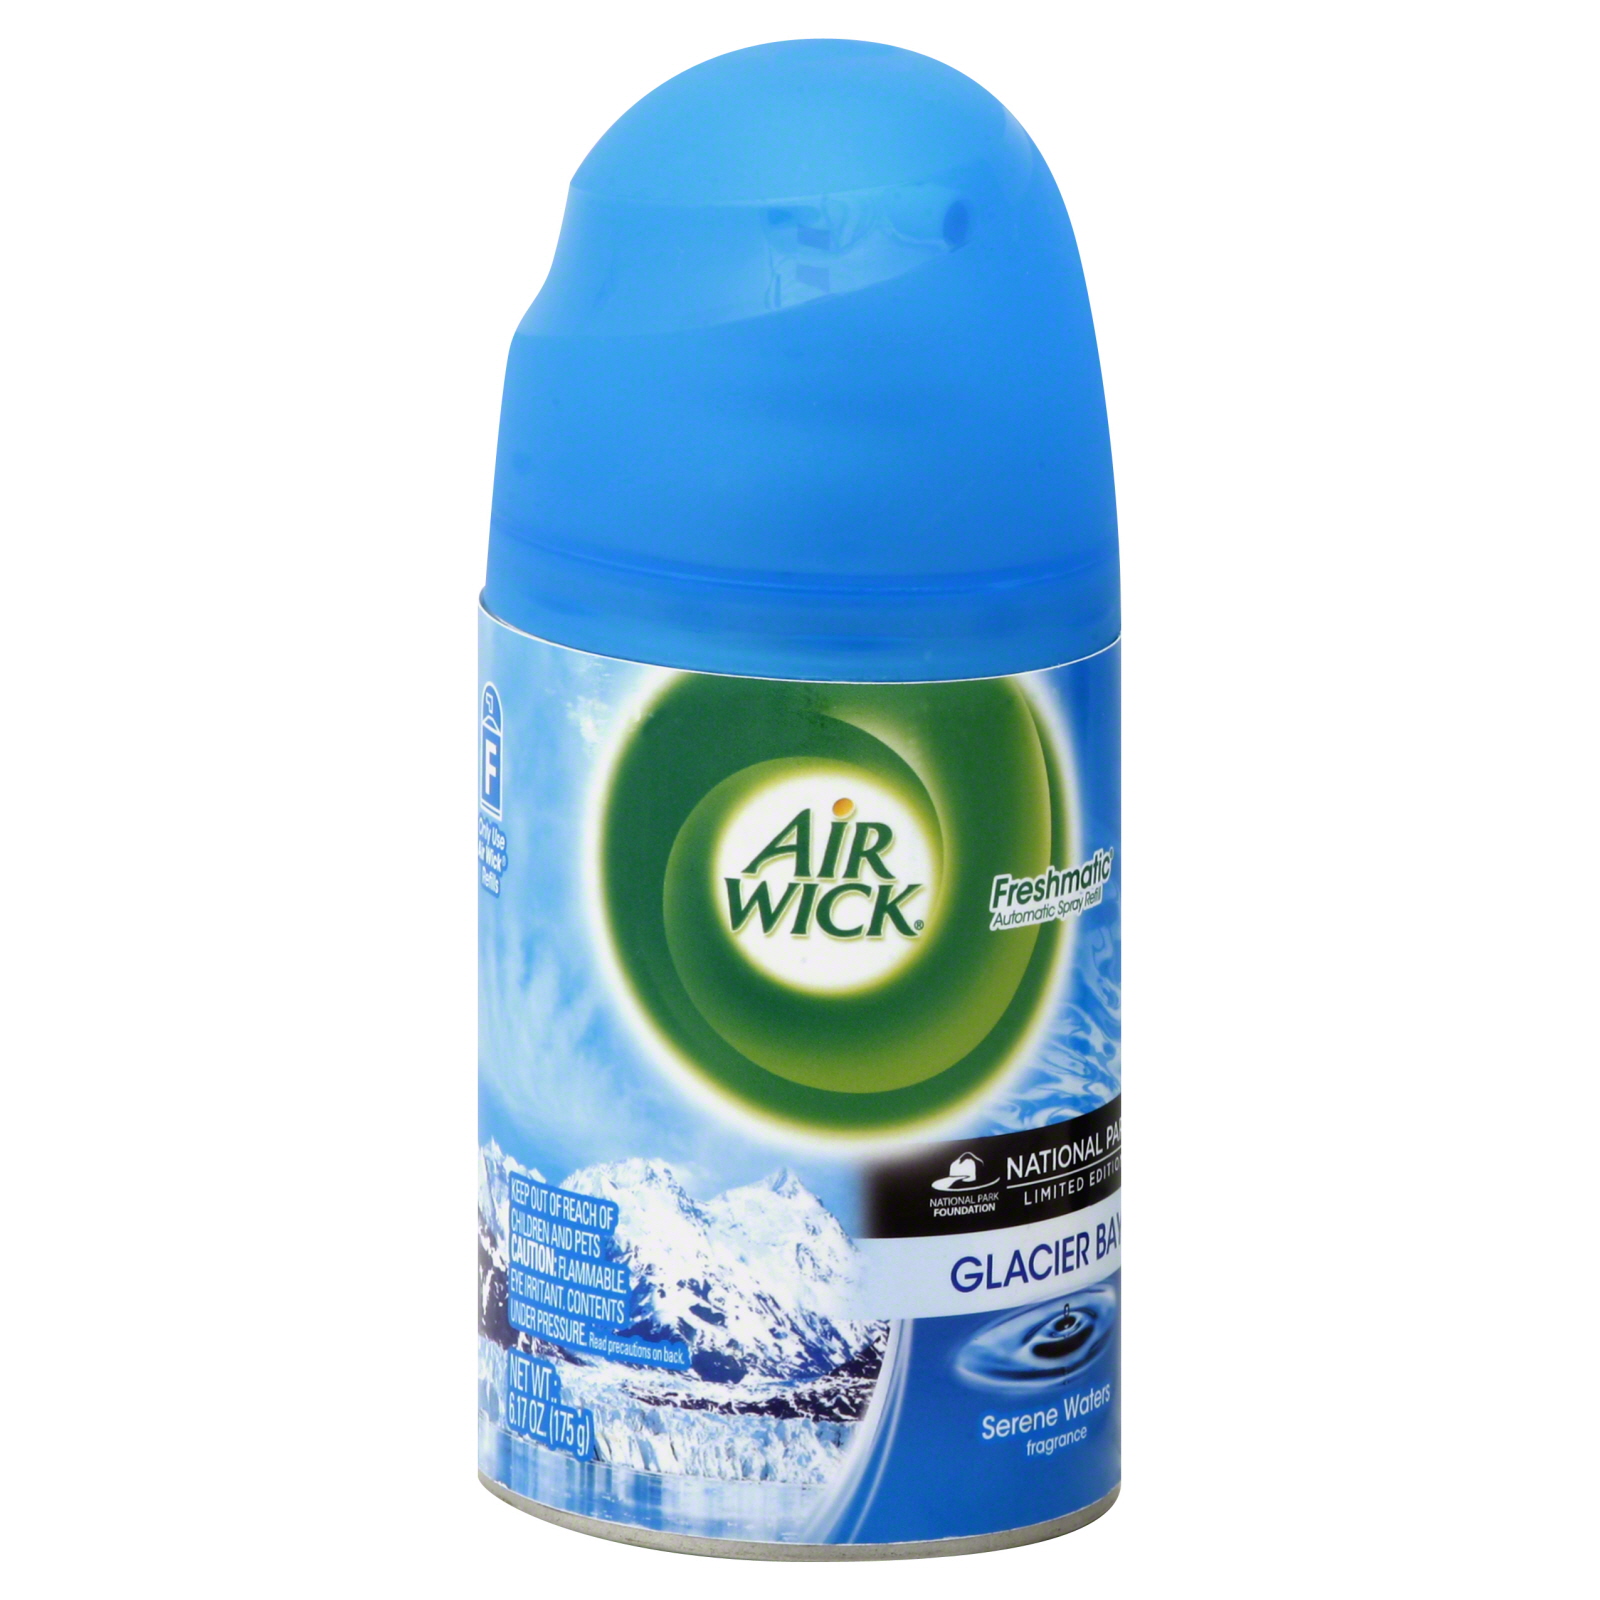 Airwick Freshmatic Automatic Spray Refill, Glacier Bay, Serene Waters, 6.17 oz (175 g)